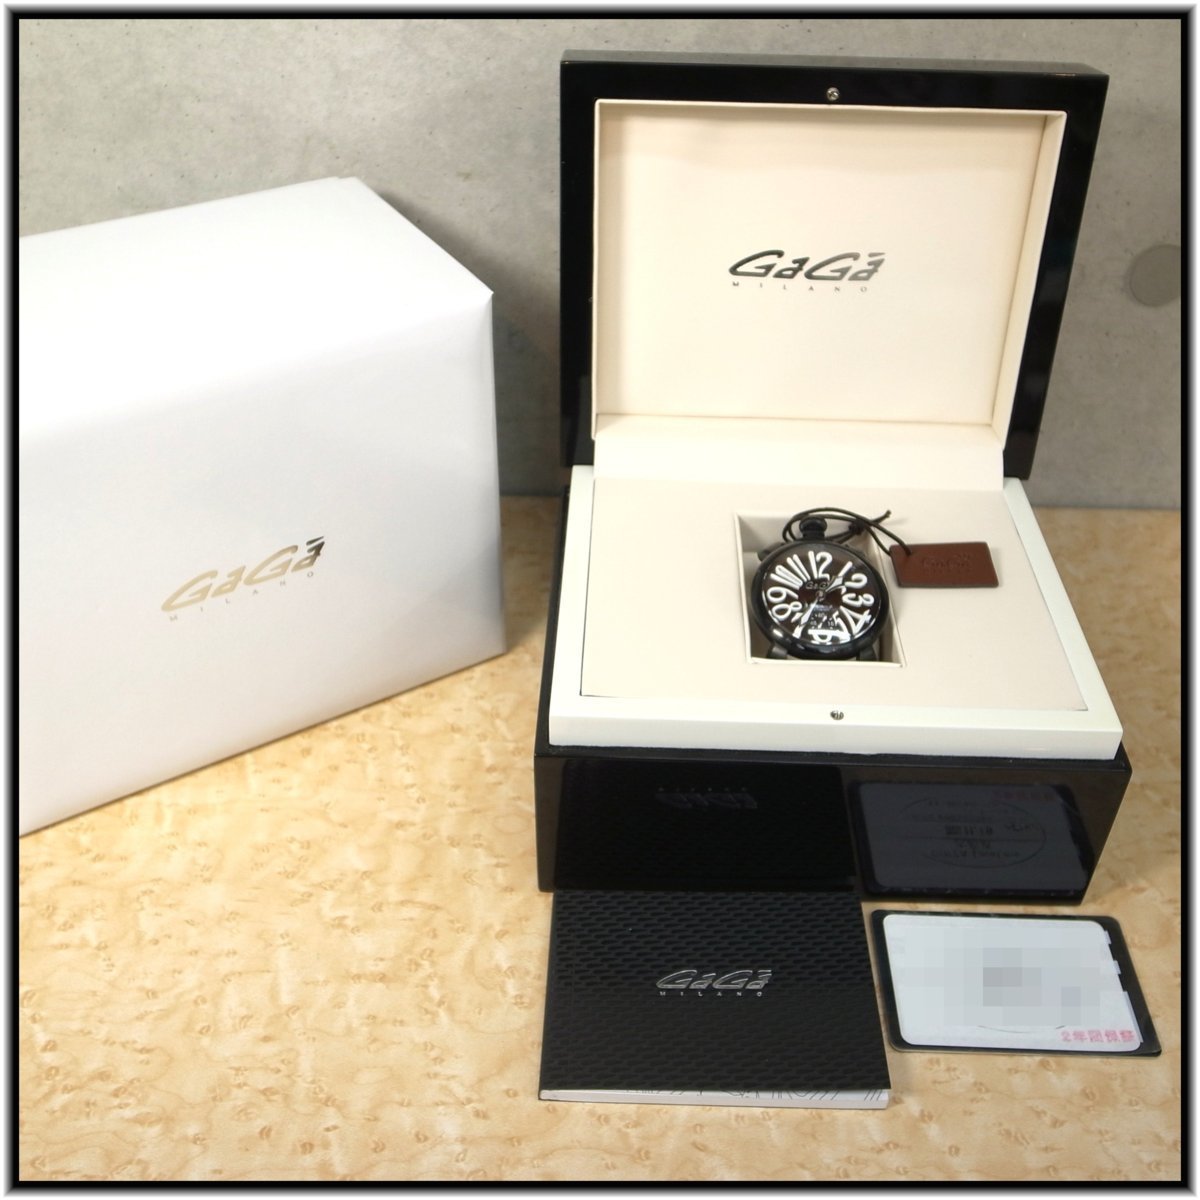 T6354【本物保証】GAGA MILANO ガガ ミラノ MANUALE 48MM 腕時計 スイス製 ガガ ミラノ 手巻き ブラウン Ref 5012